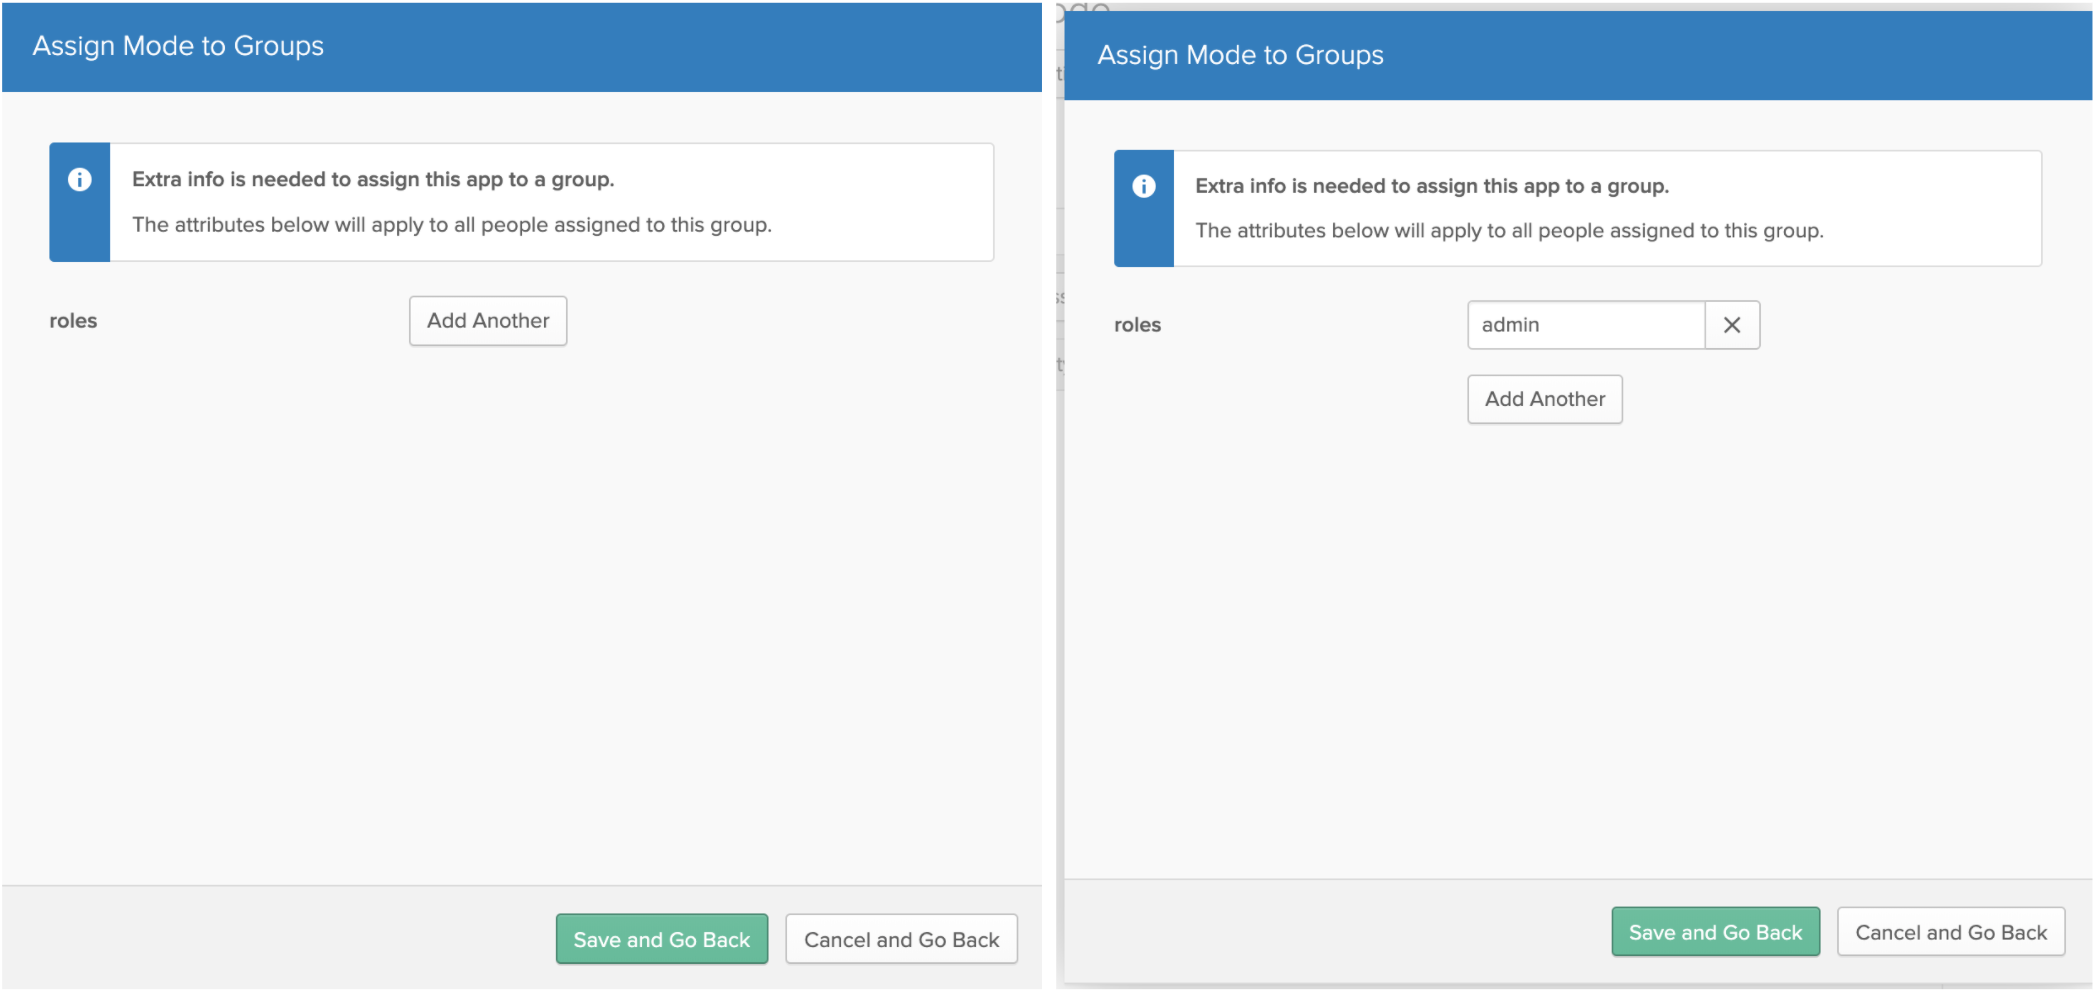 Create Mode admin Groups